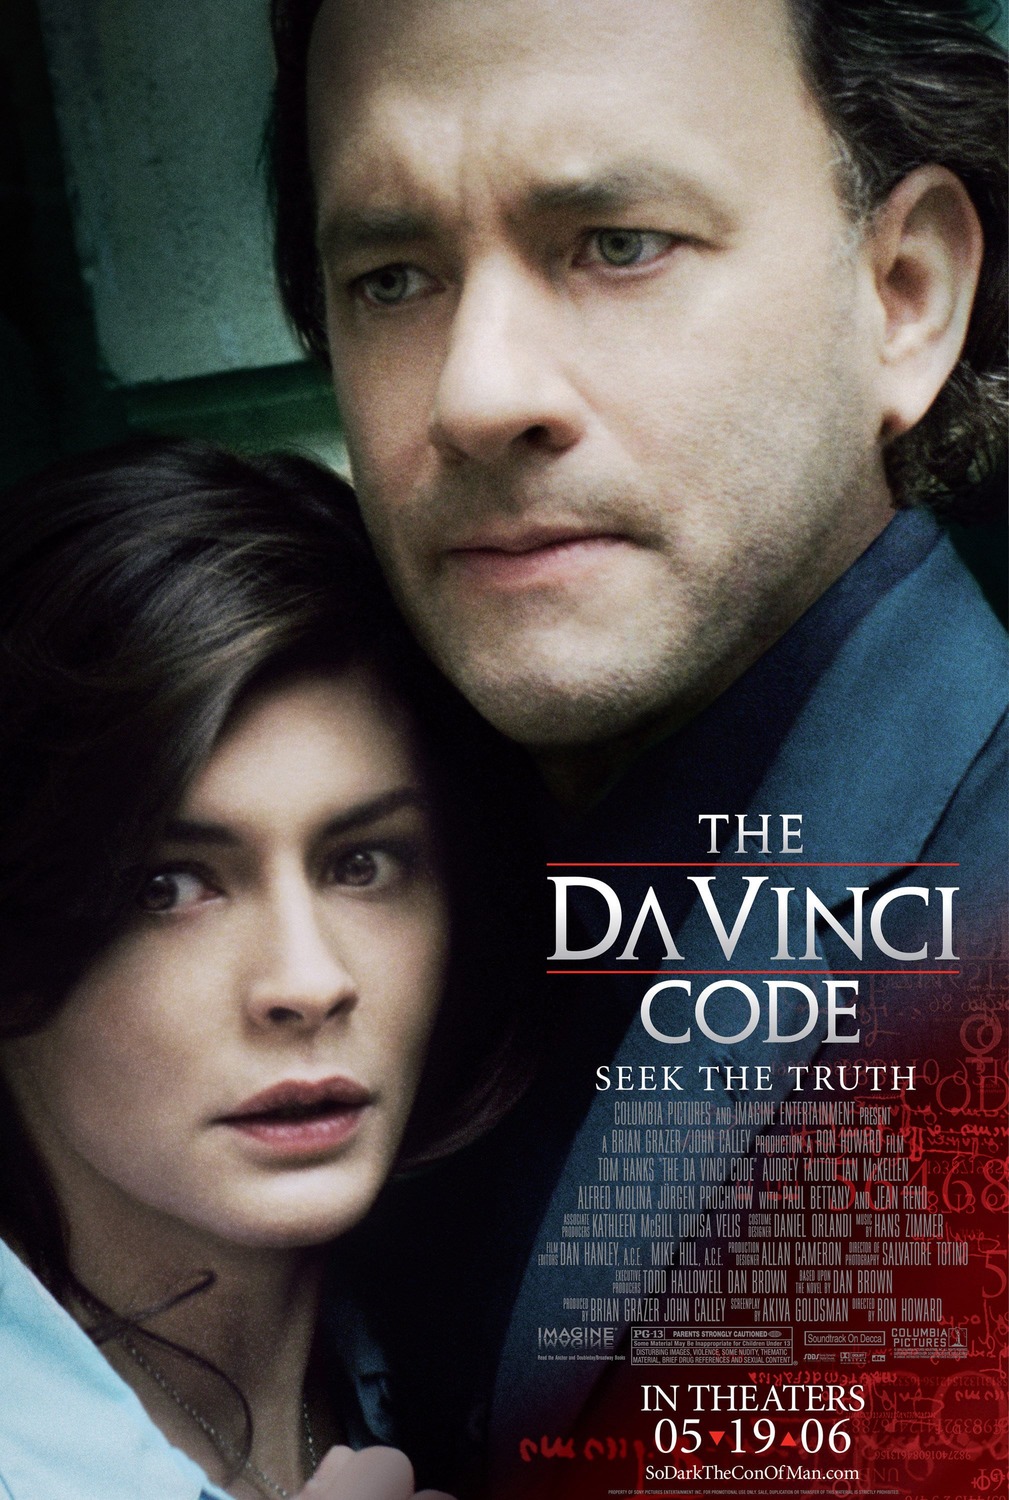 the da vinci code author movies like the the da vinci code